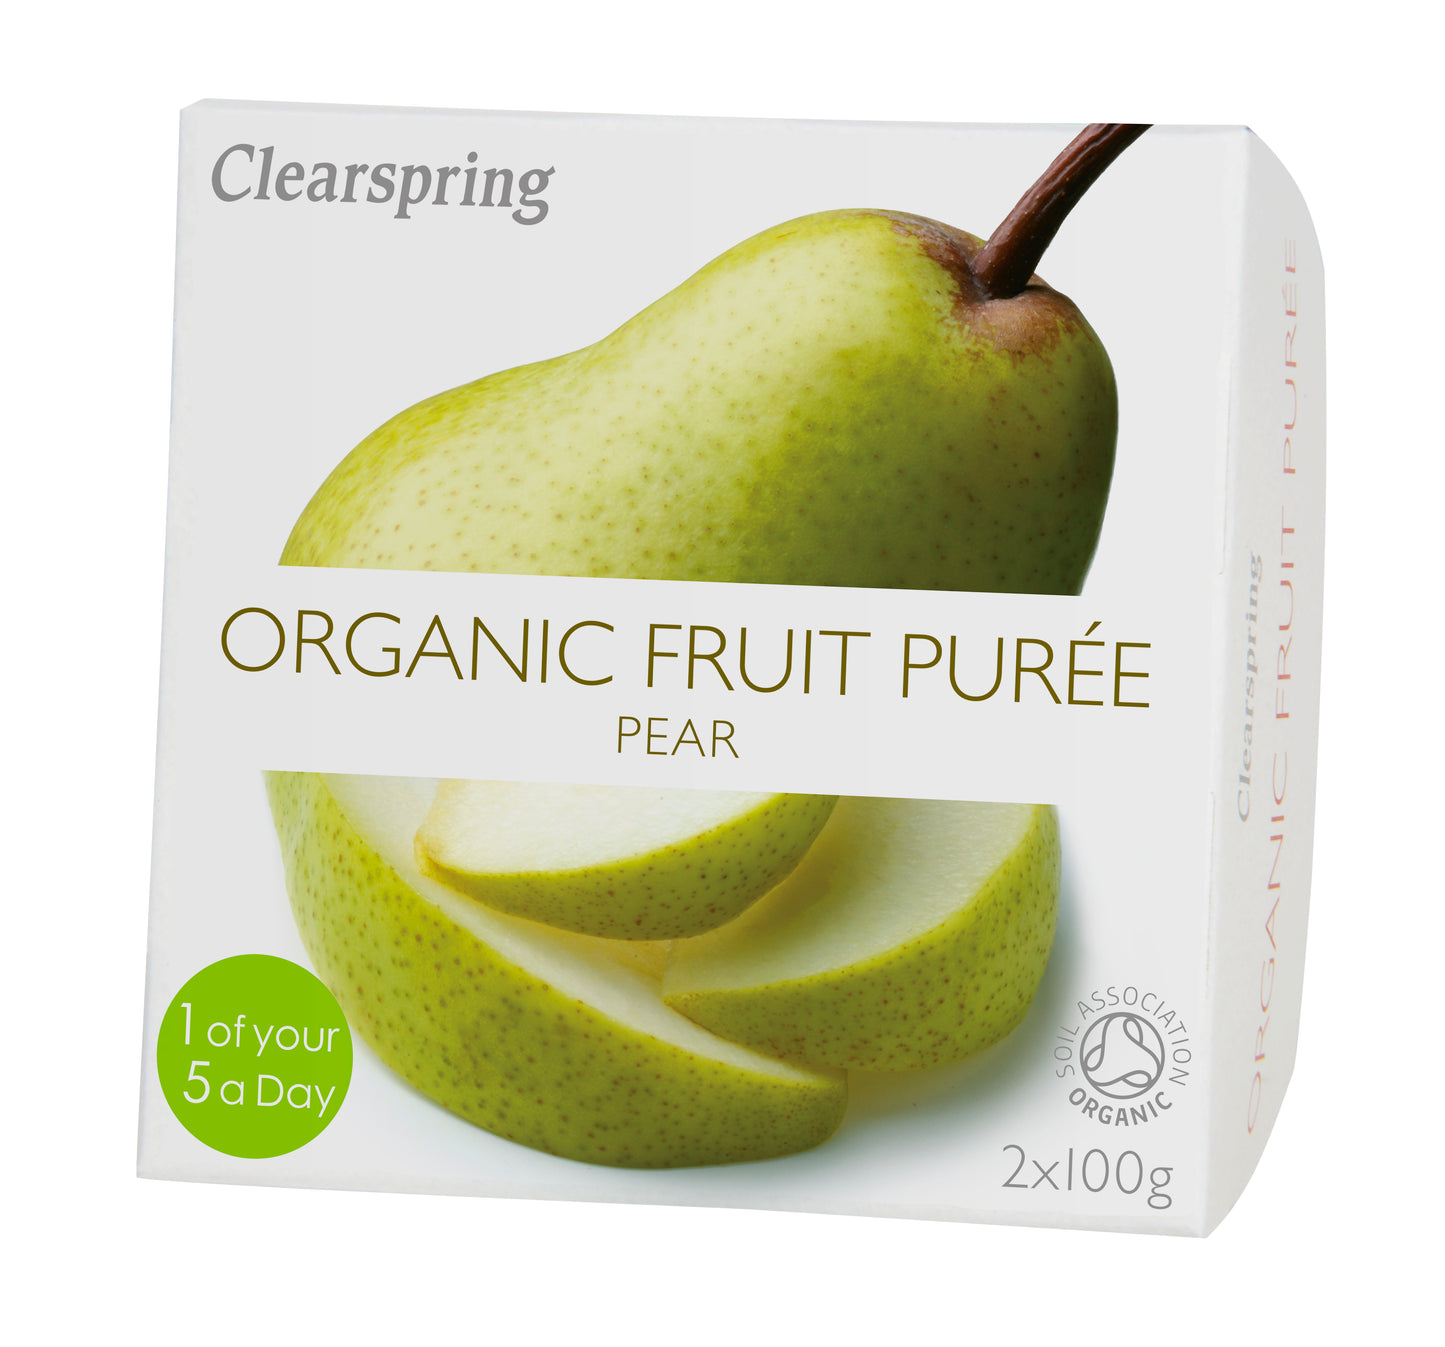 Organic Fruit Purée - Pear (2x100g)